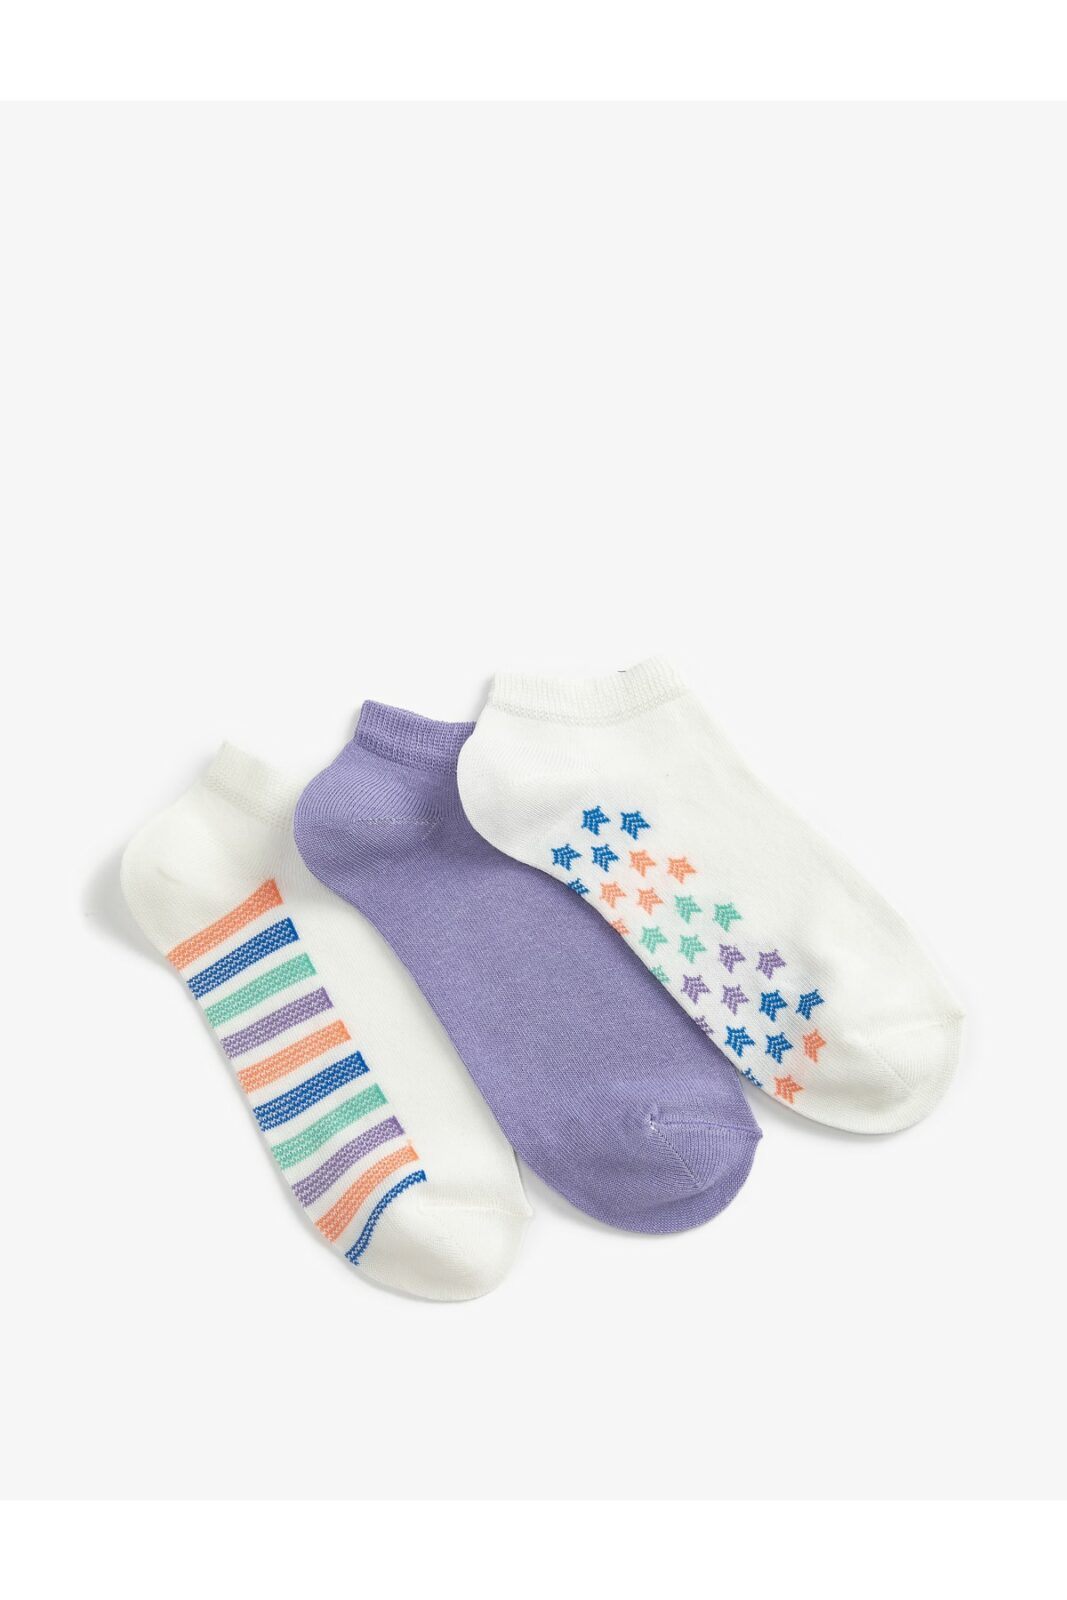 Koton Socks - Purple -